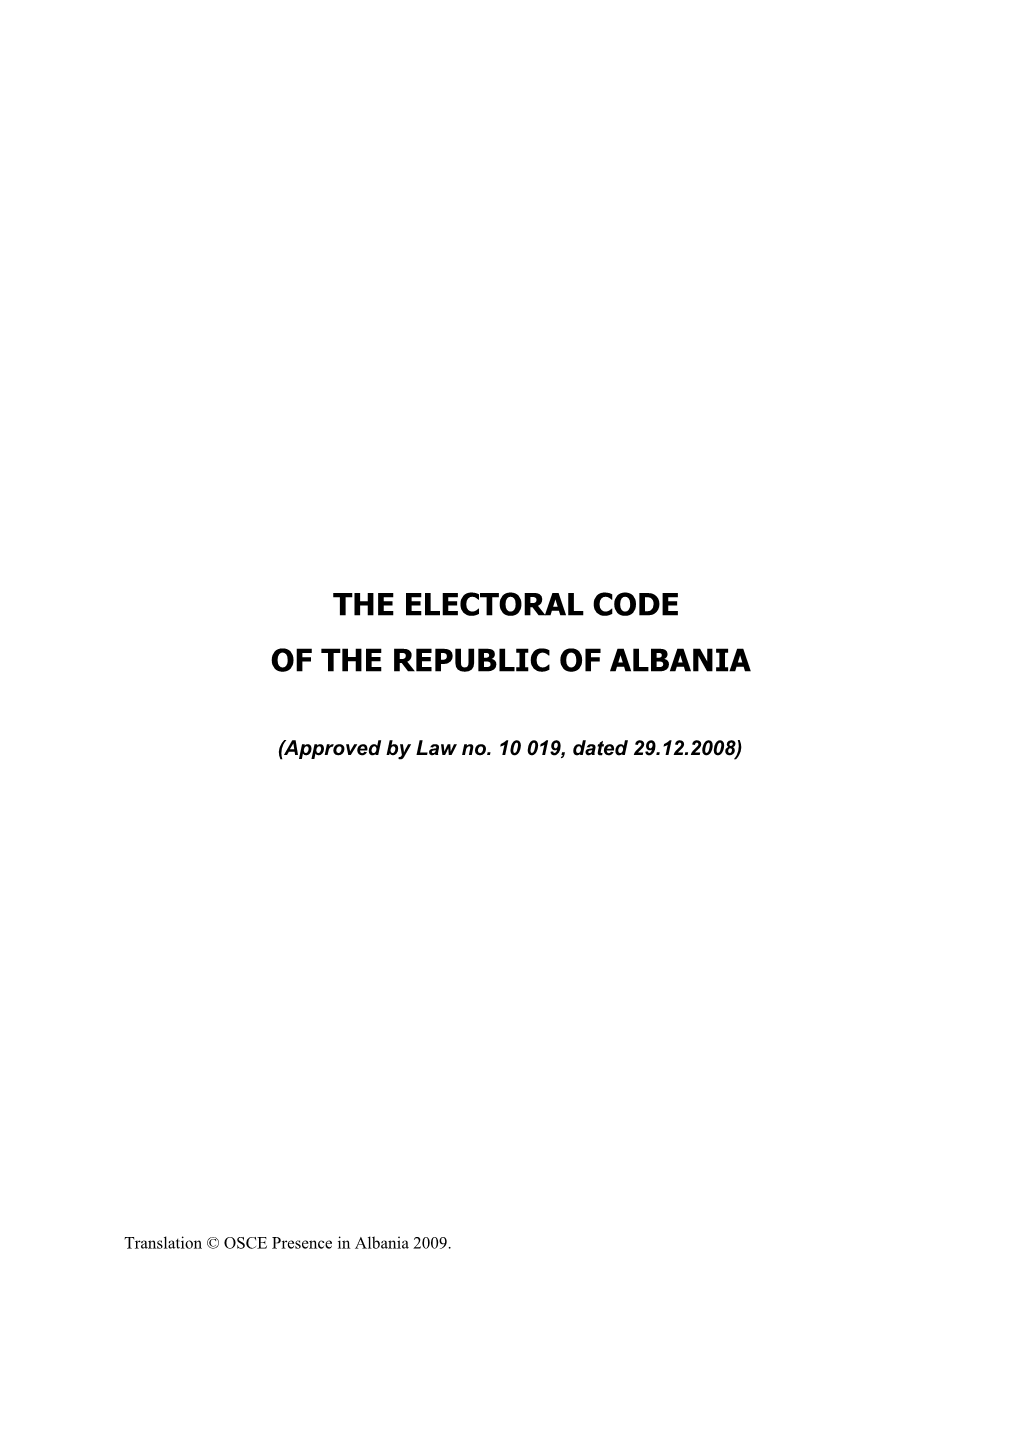 The Electoral Code